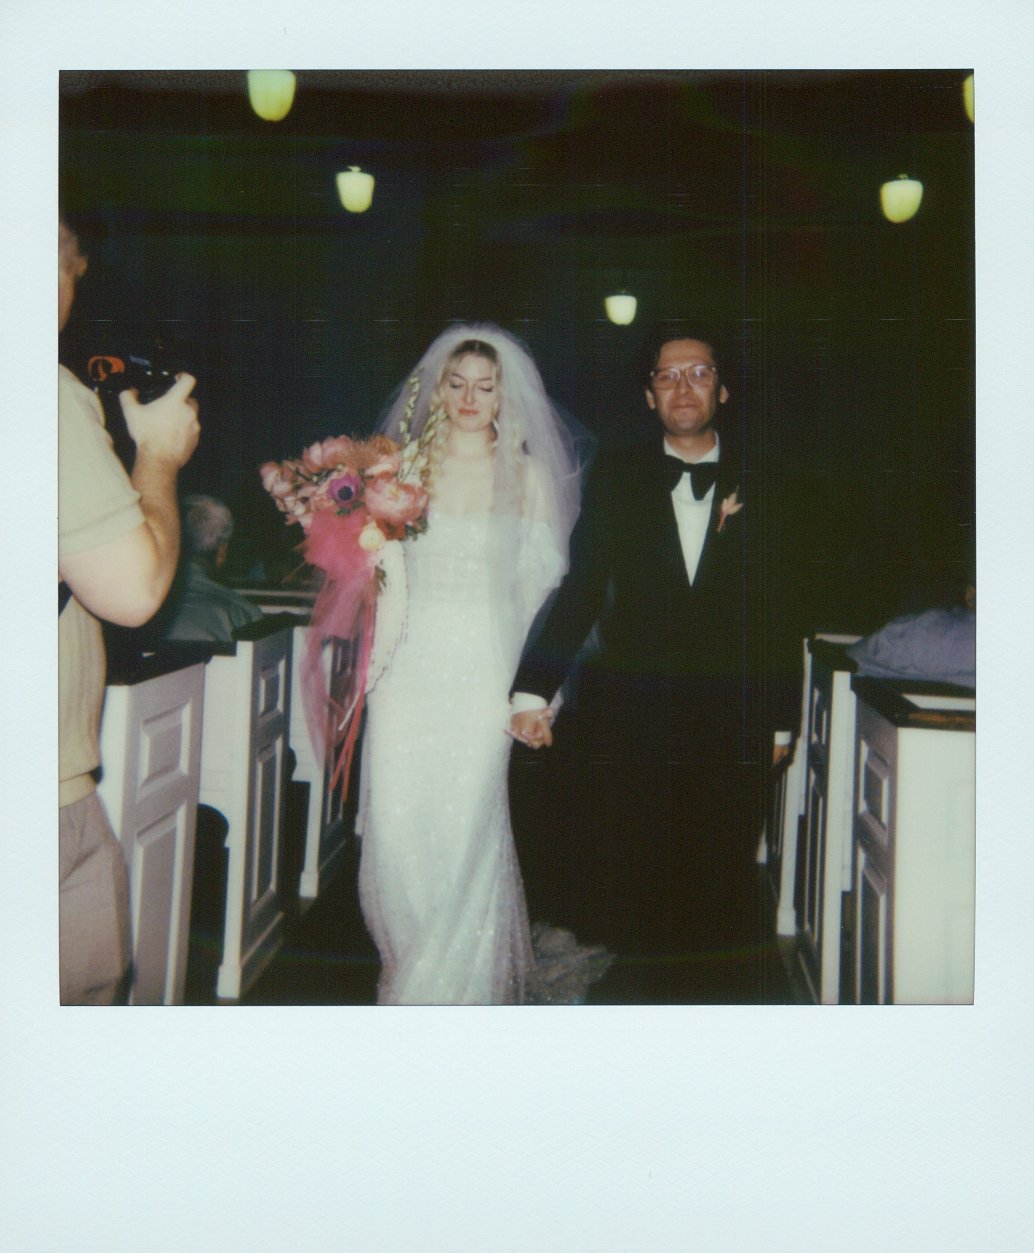 Wedding-taken-on-polaroids10.jpg